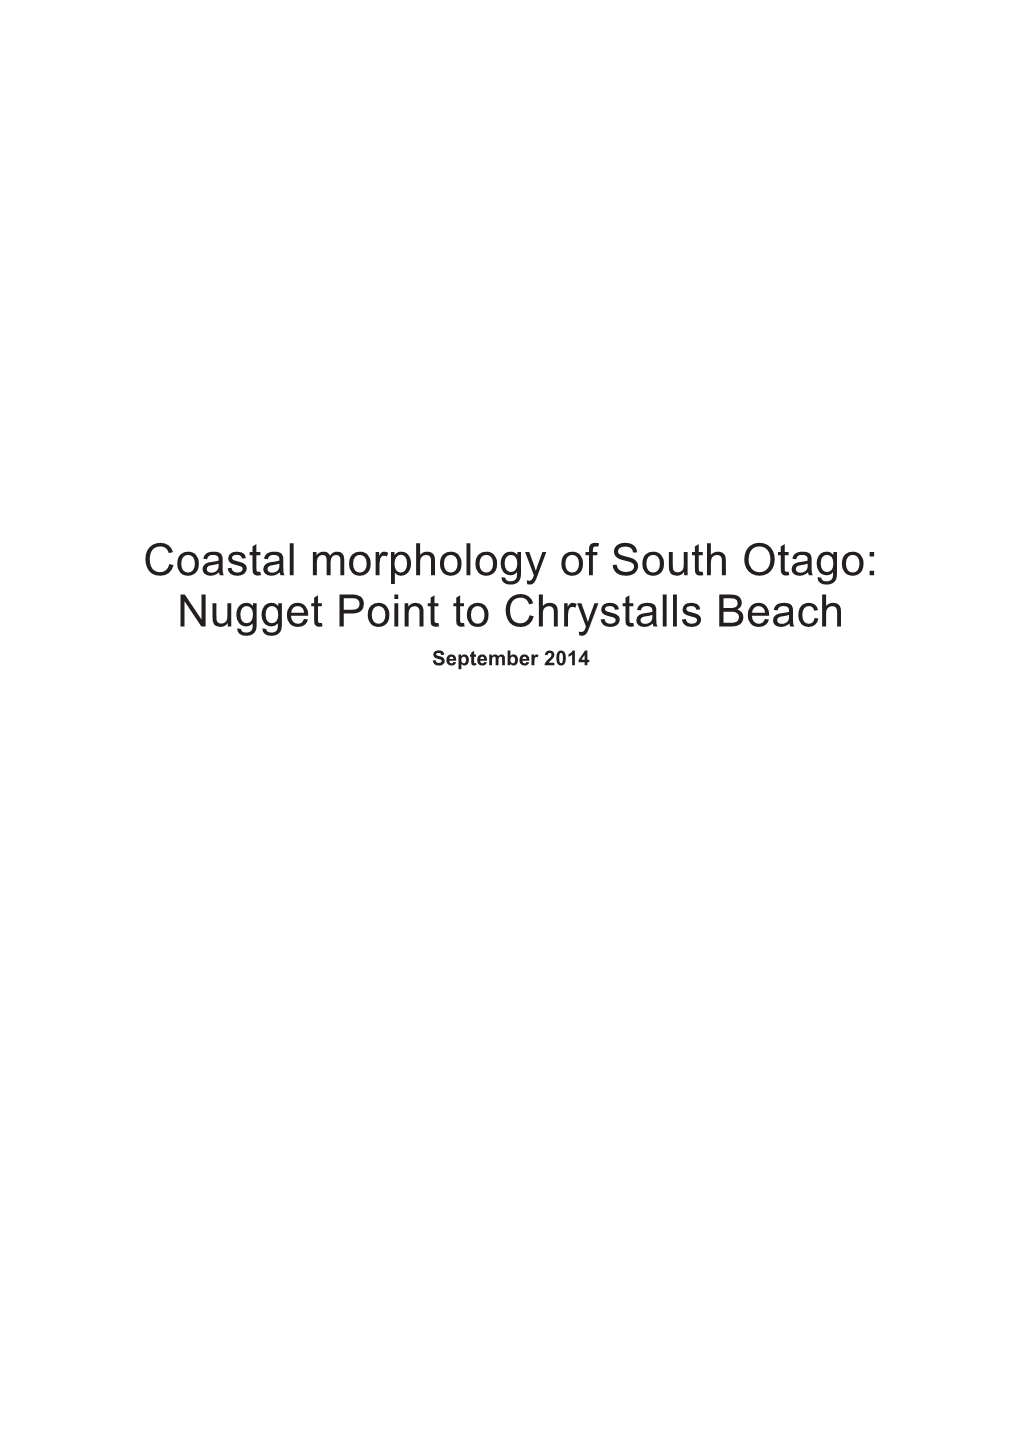 Coastal Morphology of South Otago: Nugget Point to Chrystalls Beach September 2014